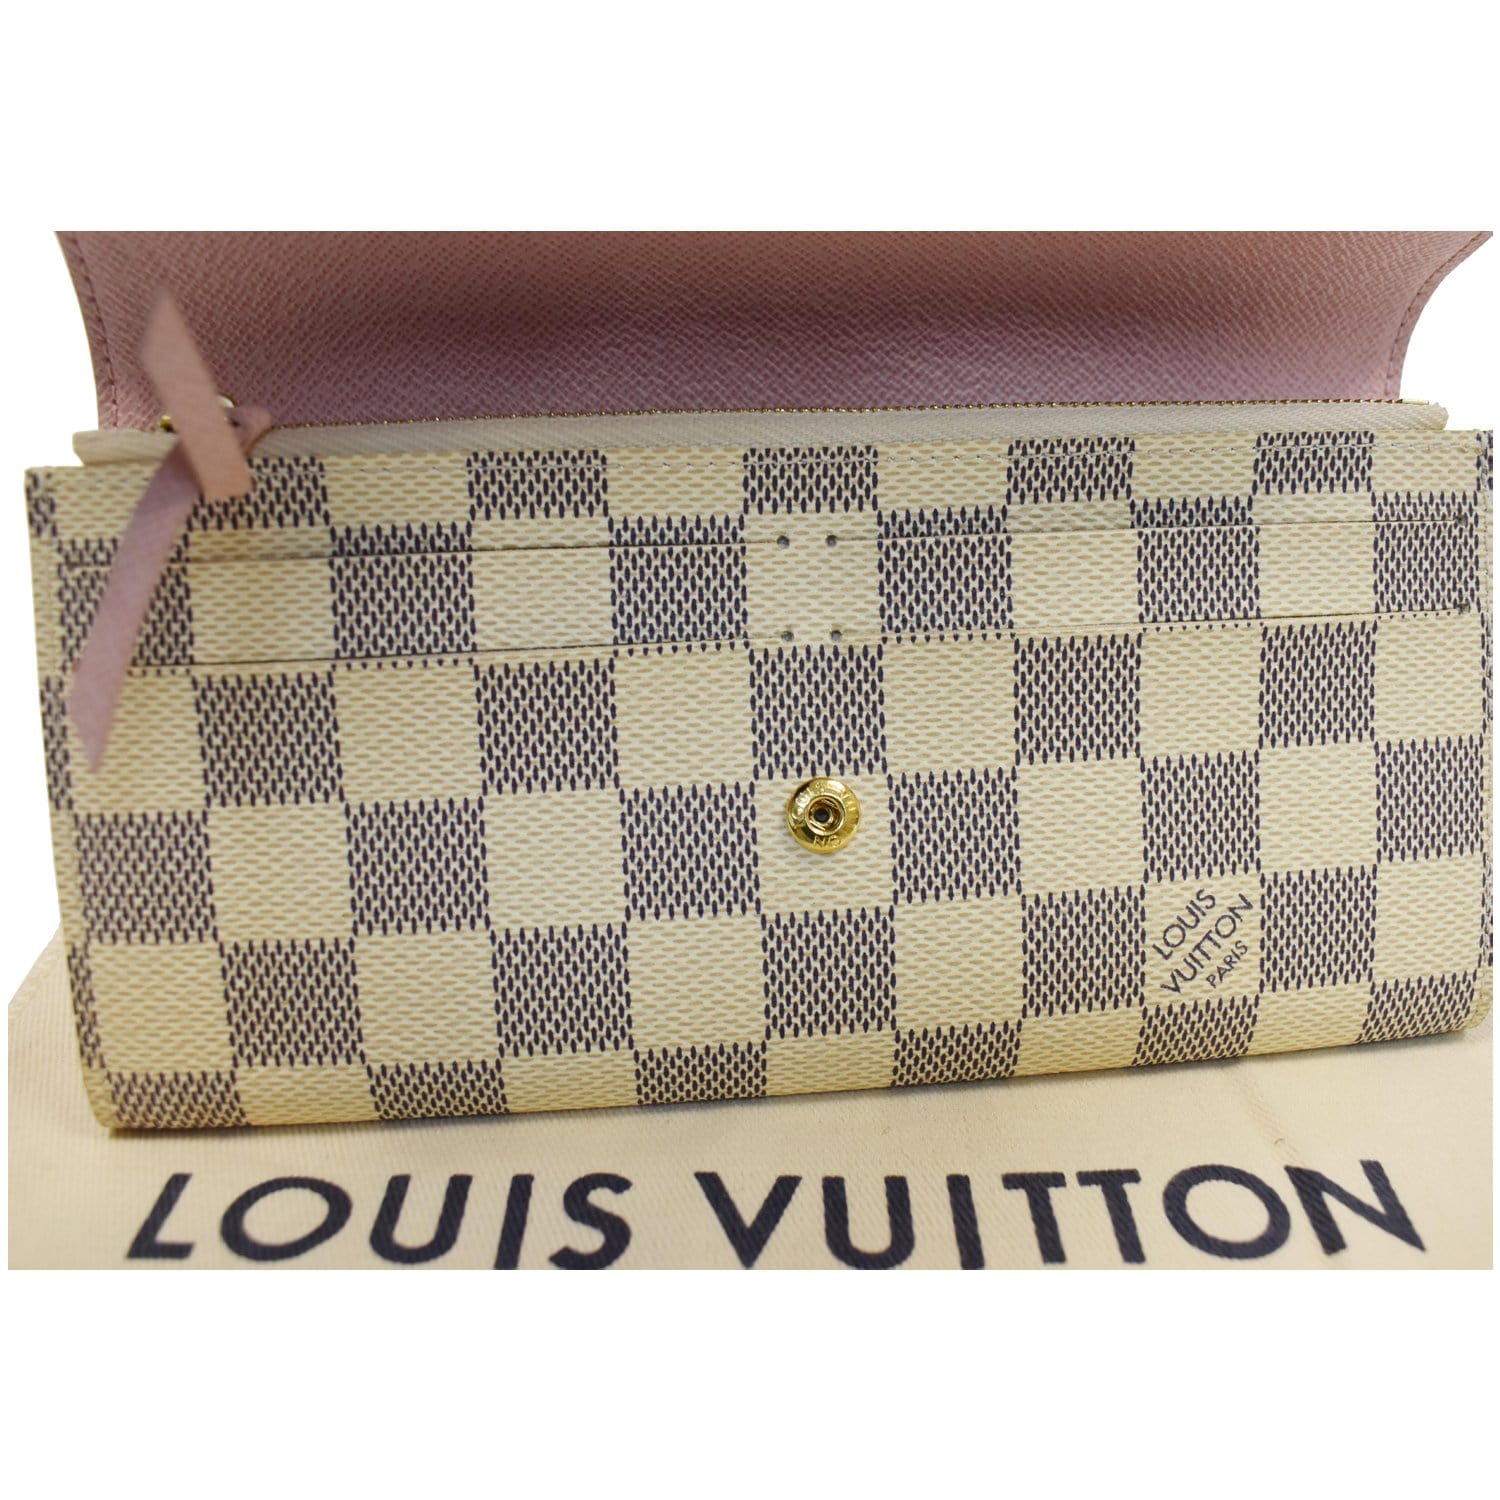 Louis Vuitton Wallet Emilie Damier Azur White/Blue in Canvas with